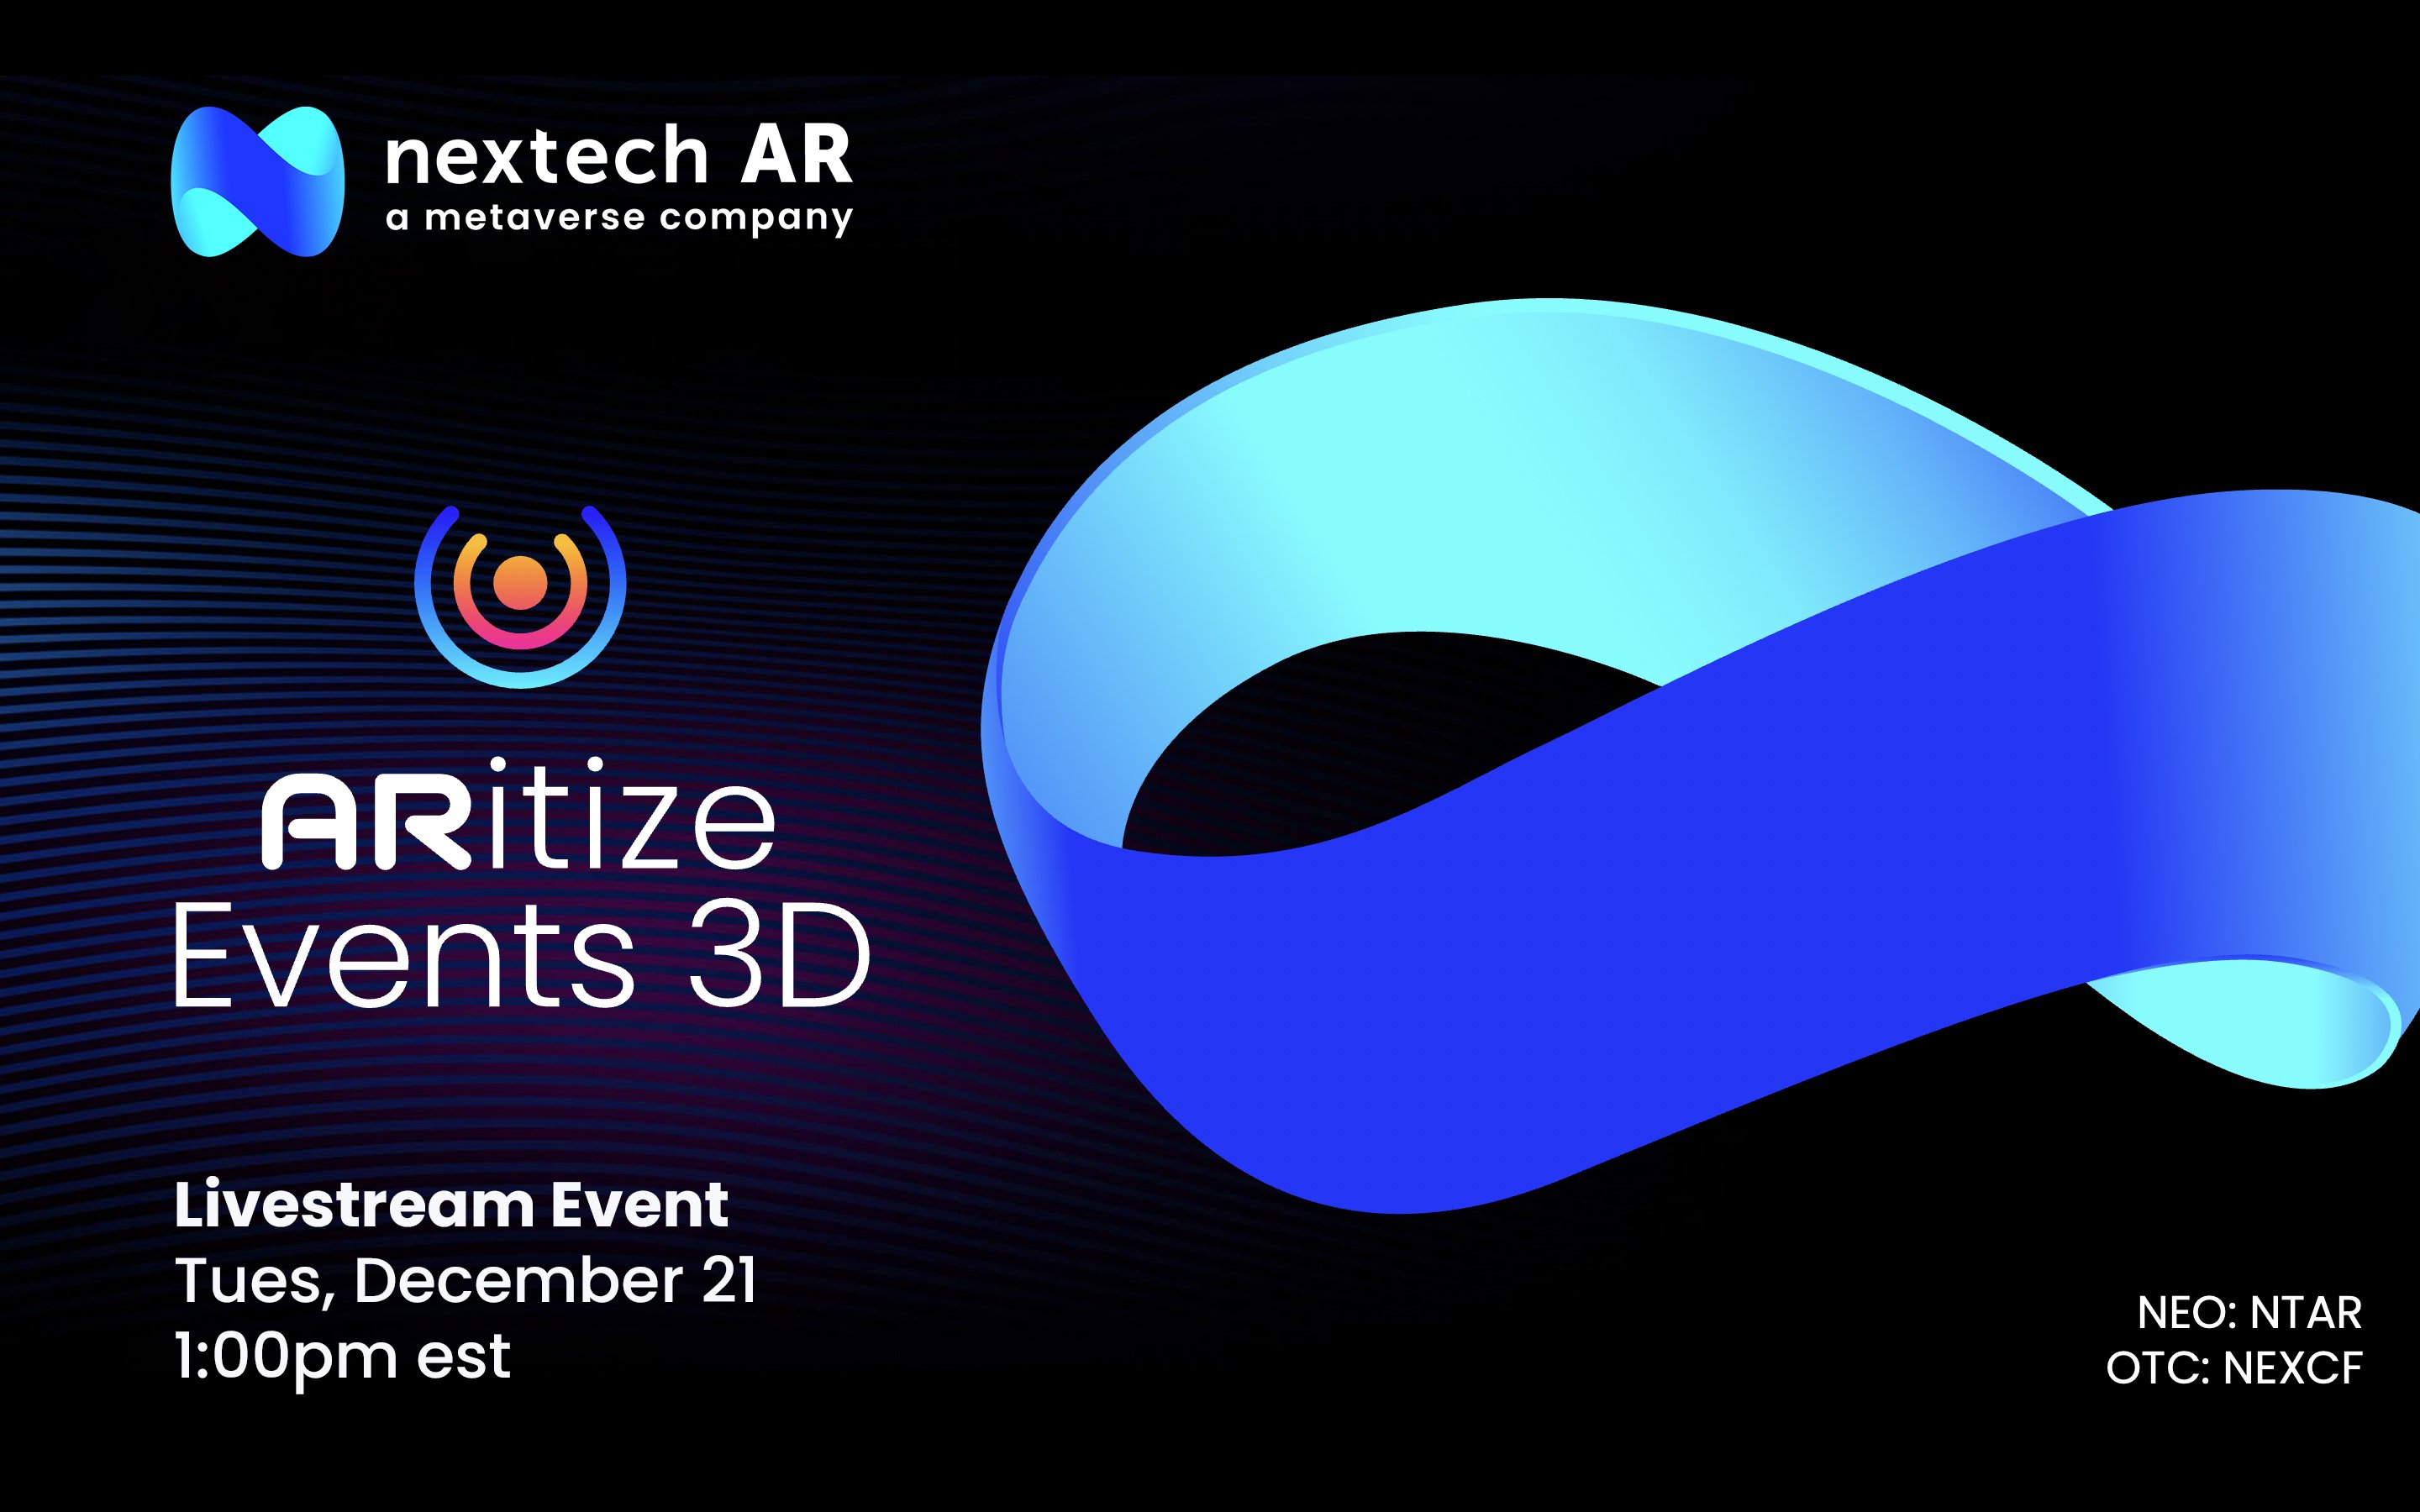 ARitize Events 3D Livestream